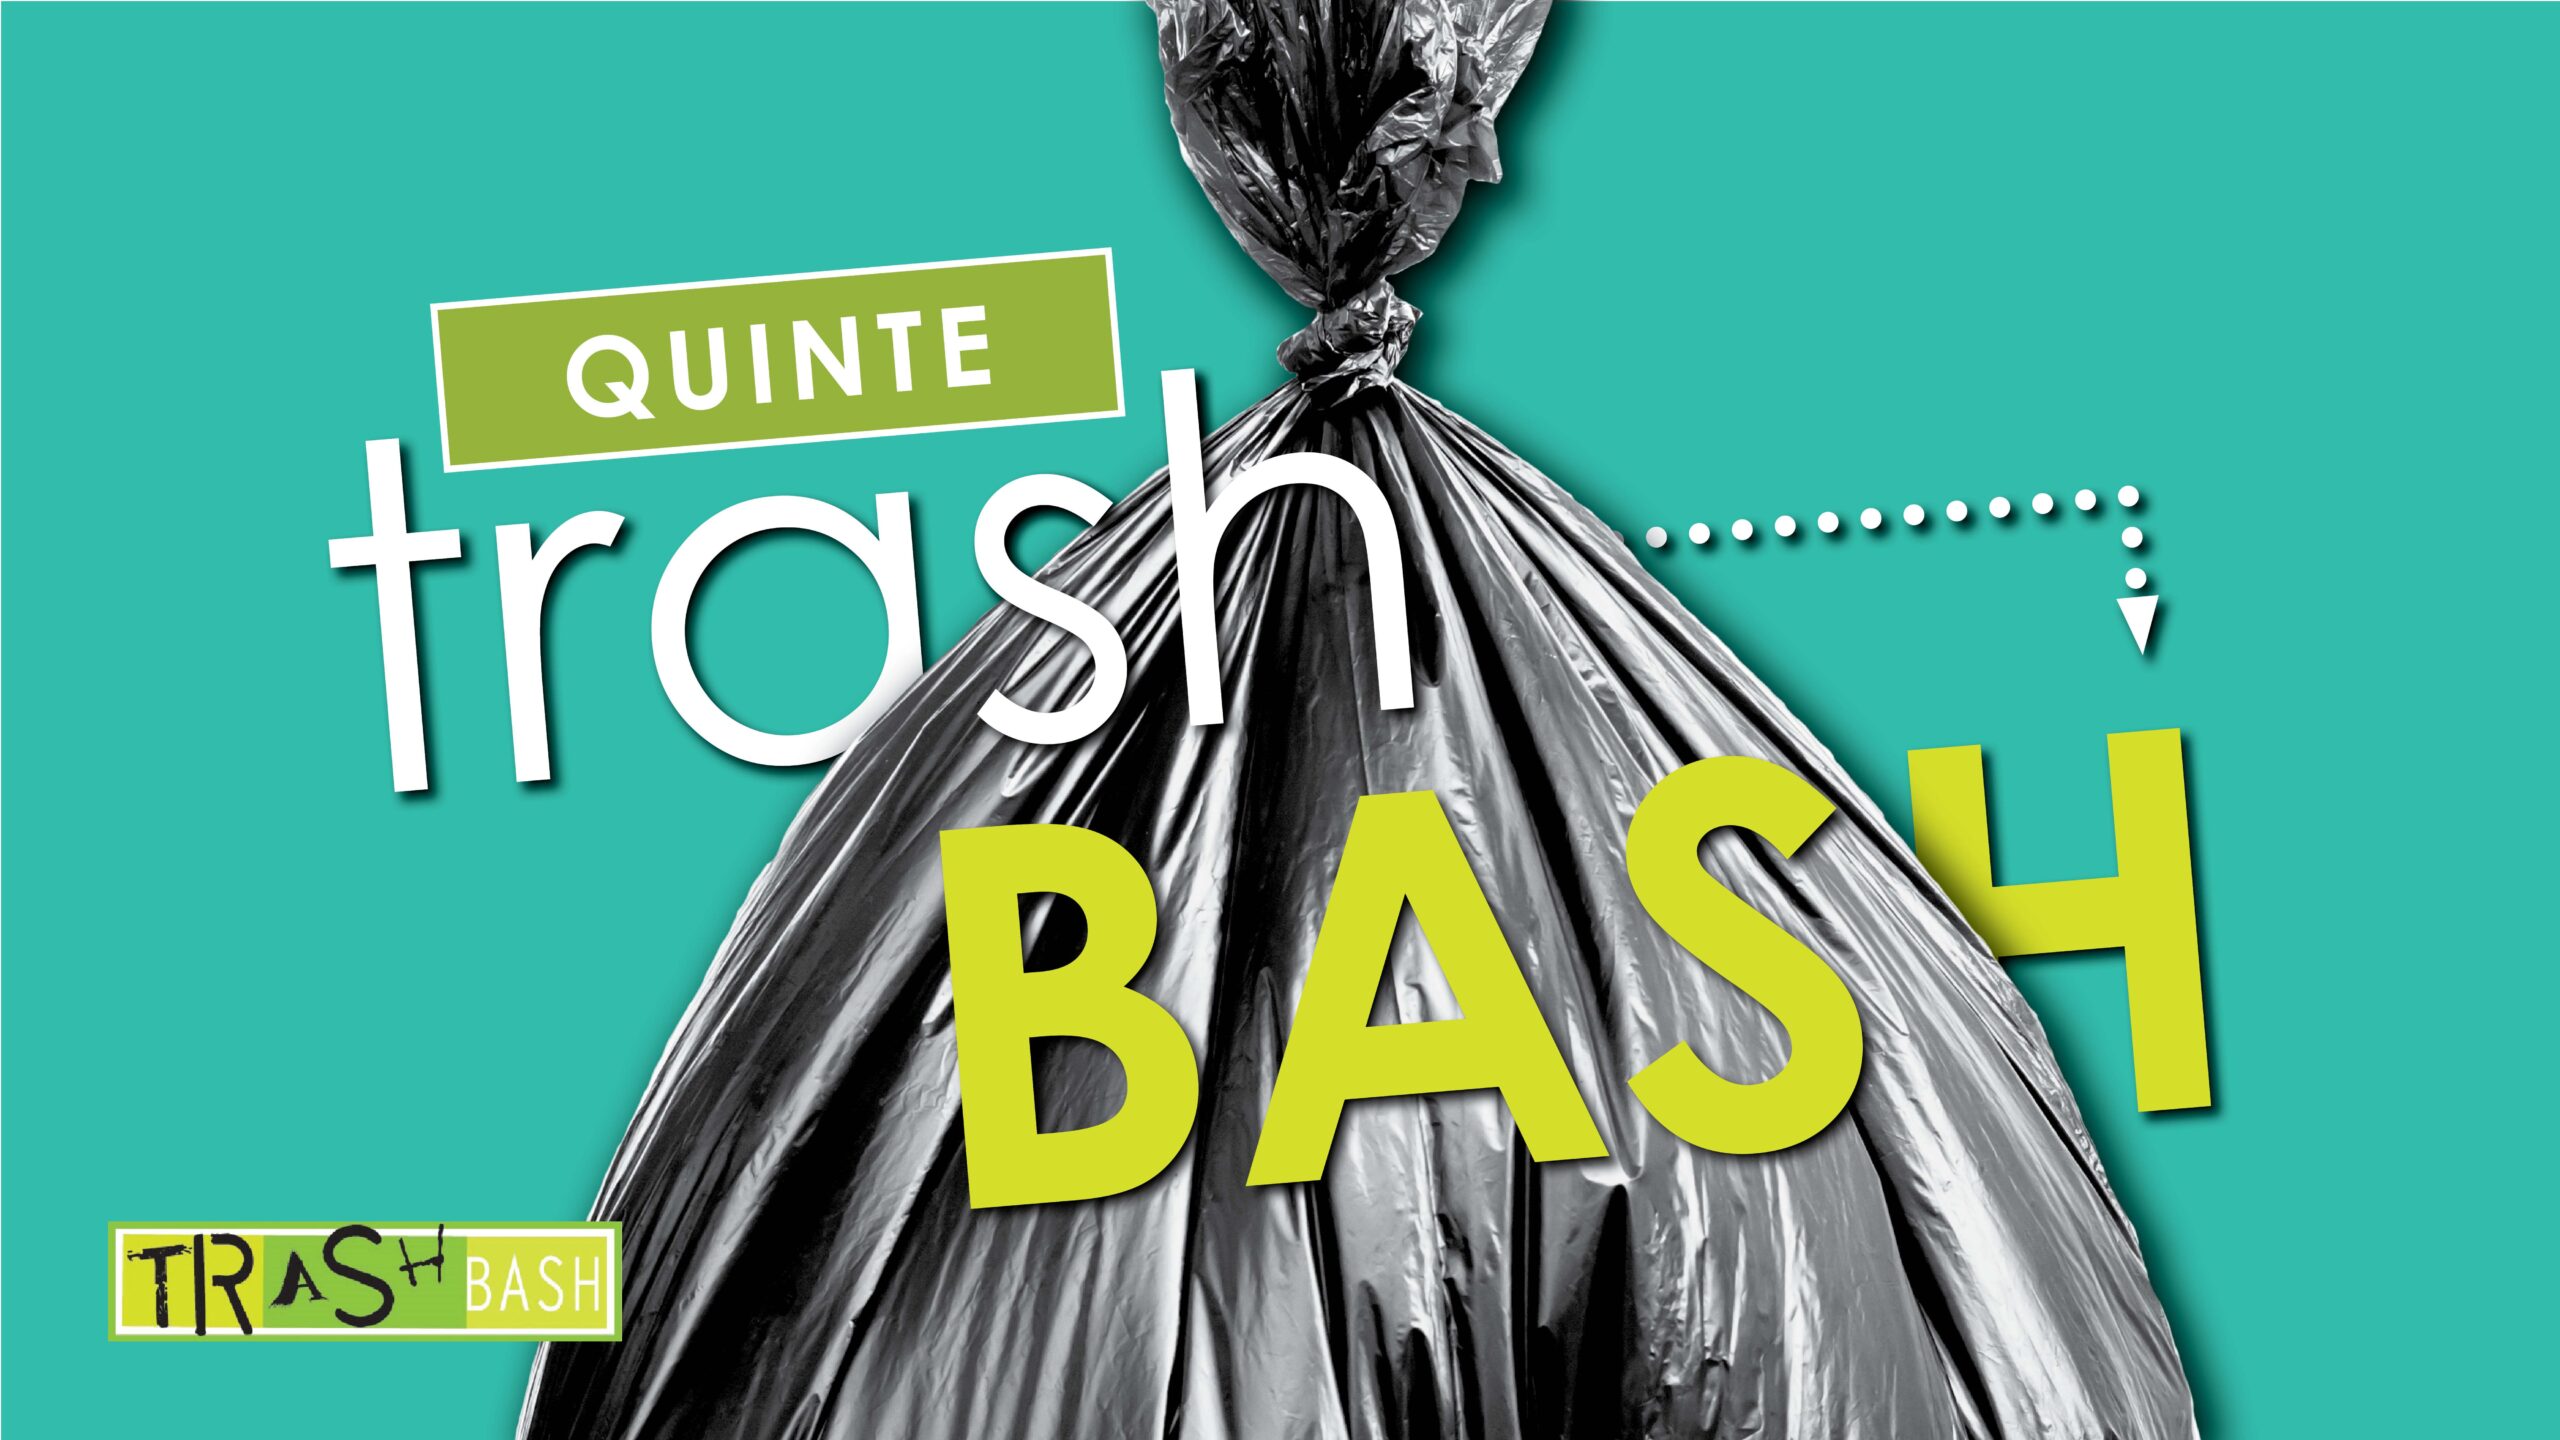 Image of a black grabage bag on a green background. Text on image says "Quinte Trash Bash"